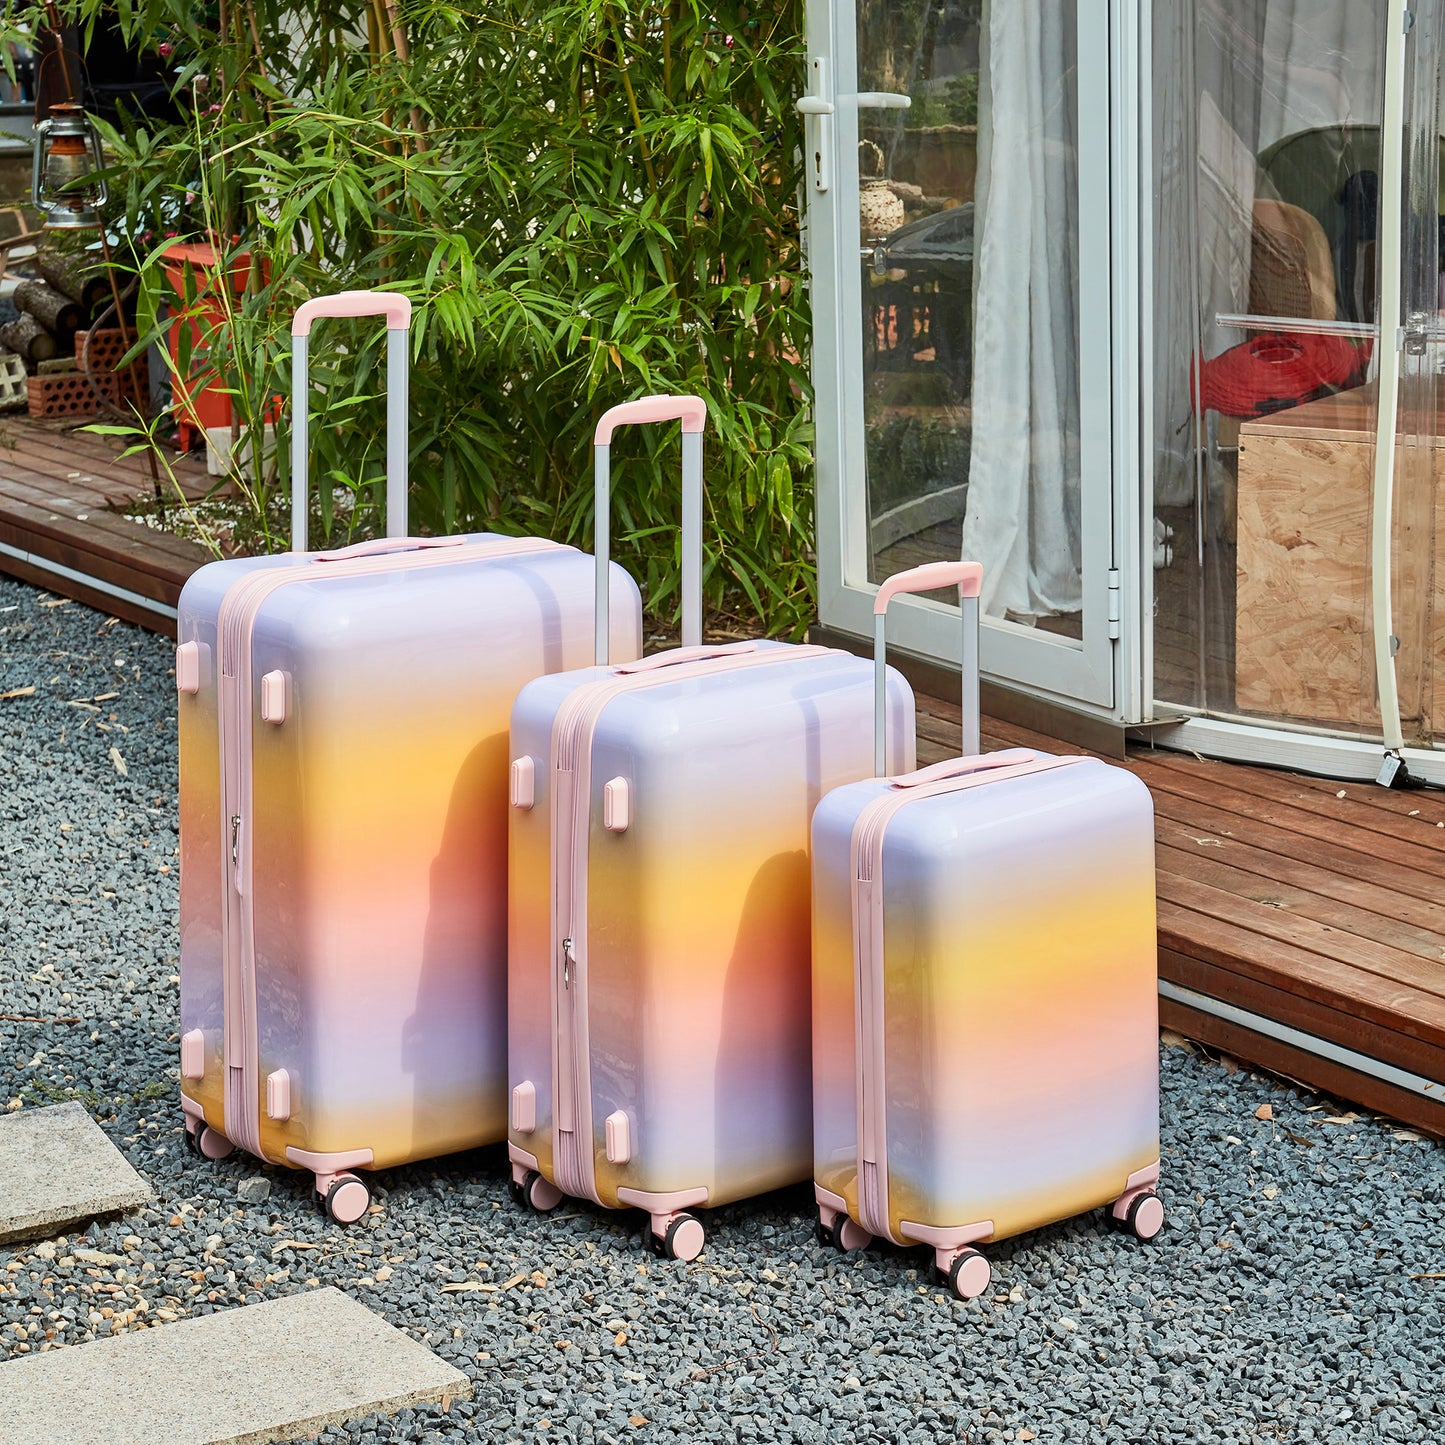 Hardshell PC Luggage Sets 3 Piece Spinner 8 wheels Suitcase with TSA Lock